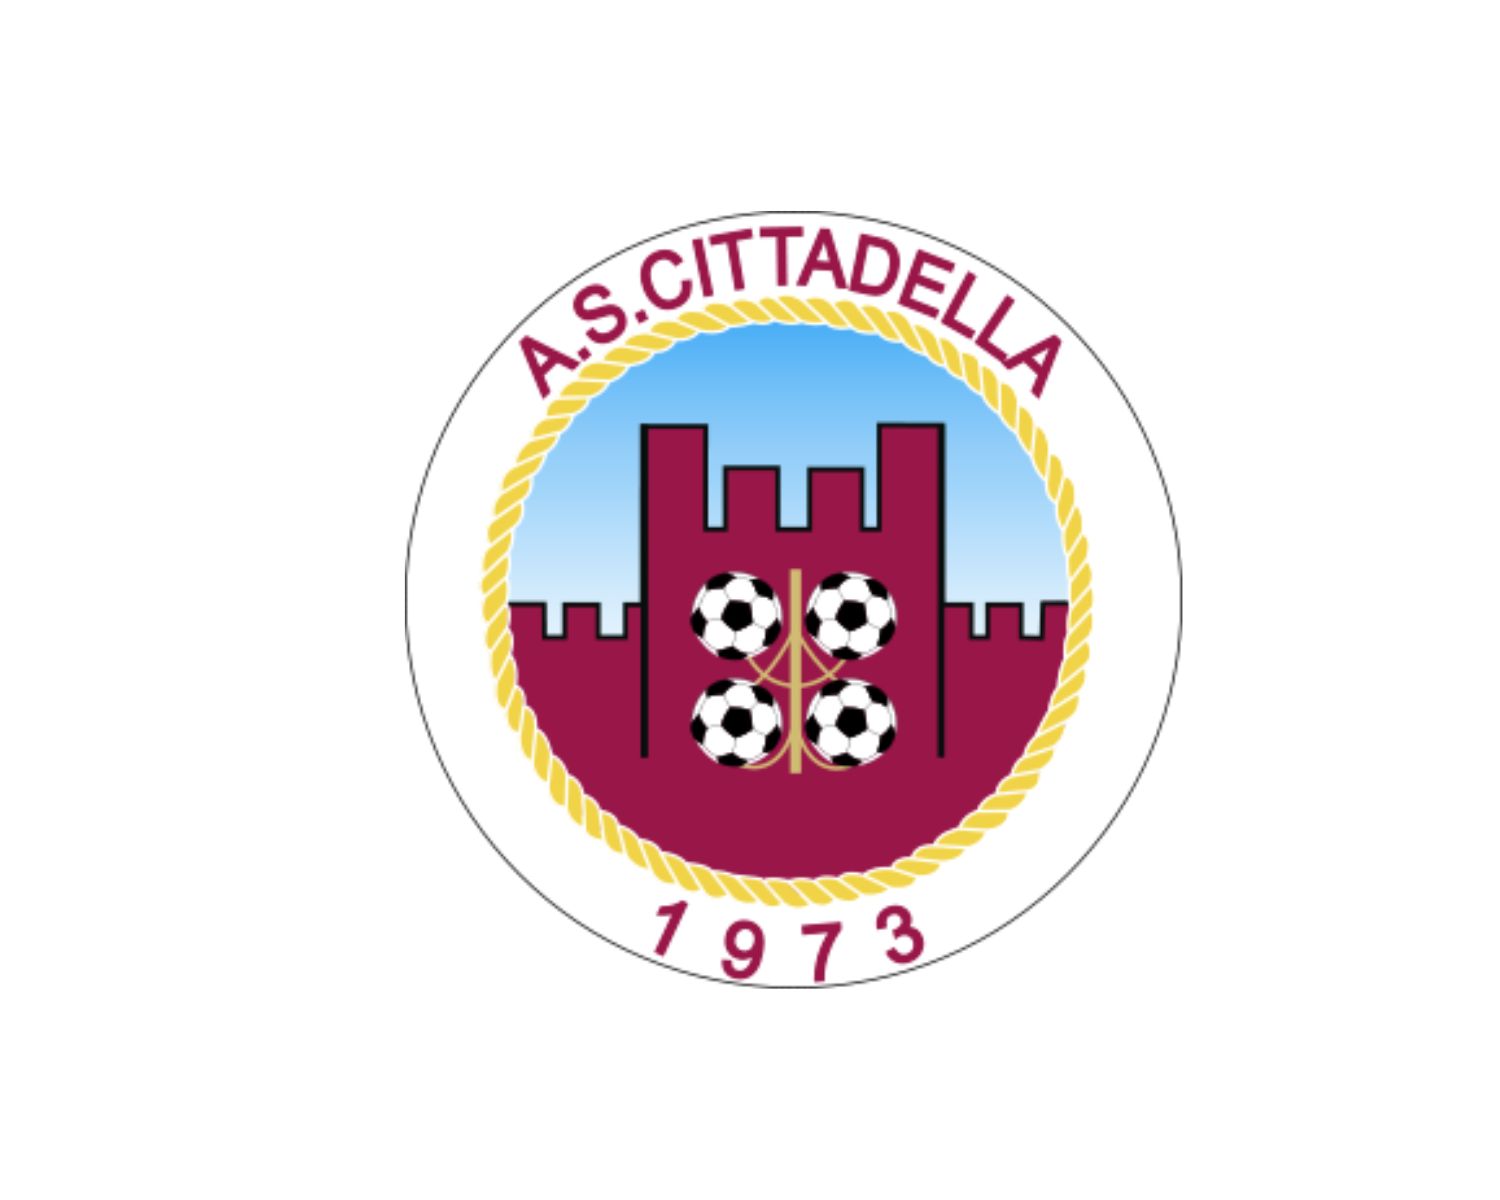 as-cittadella-25-football-club-facts